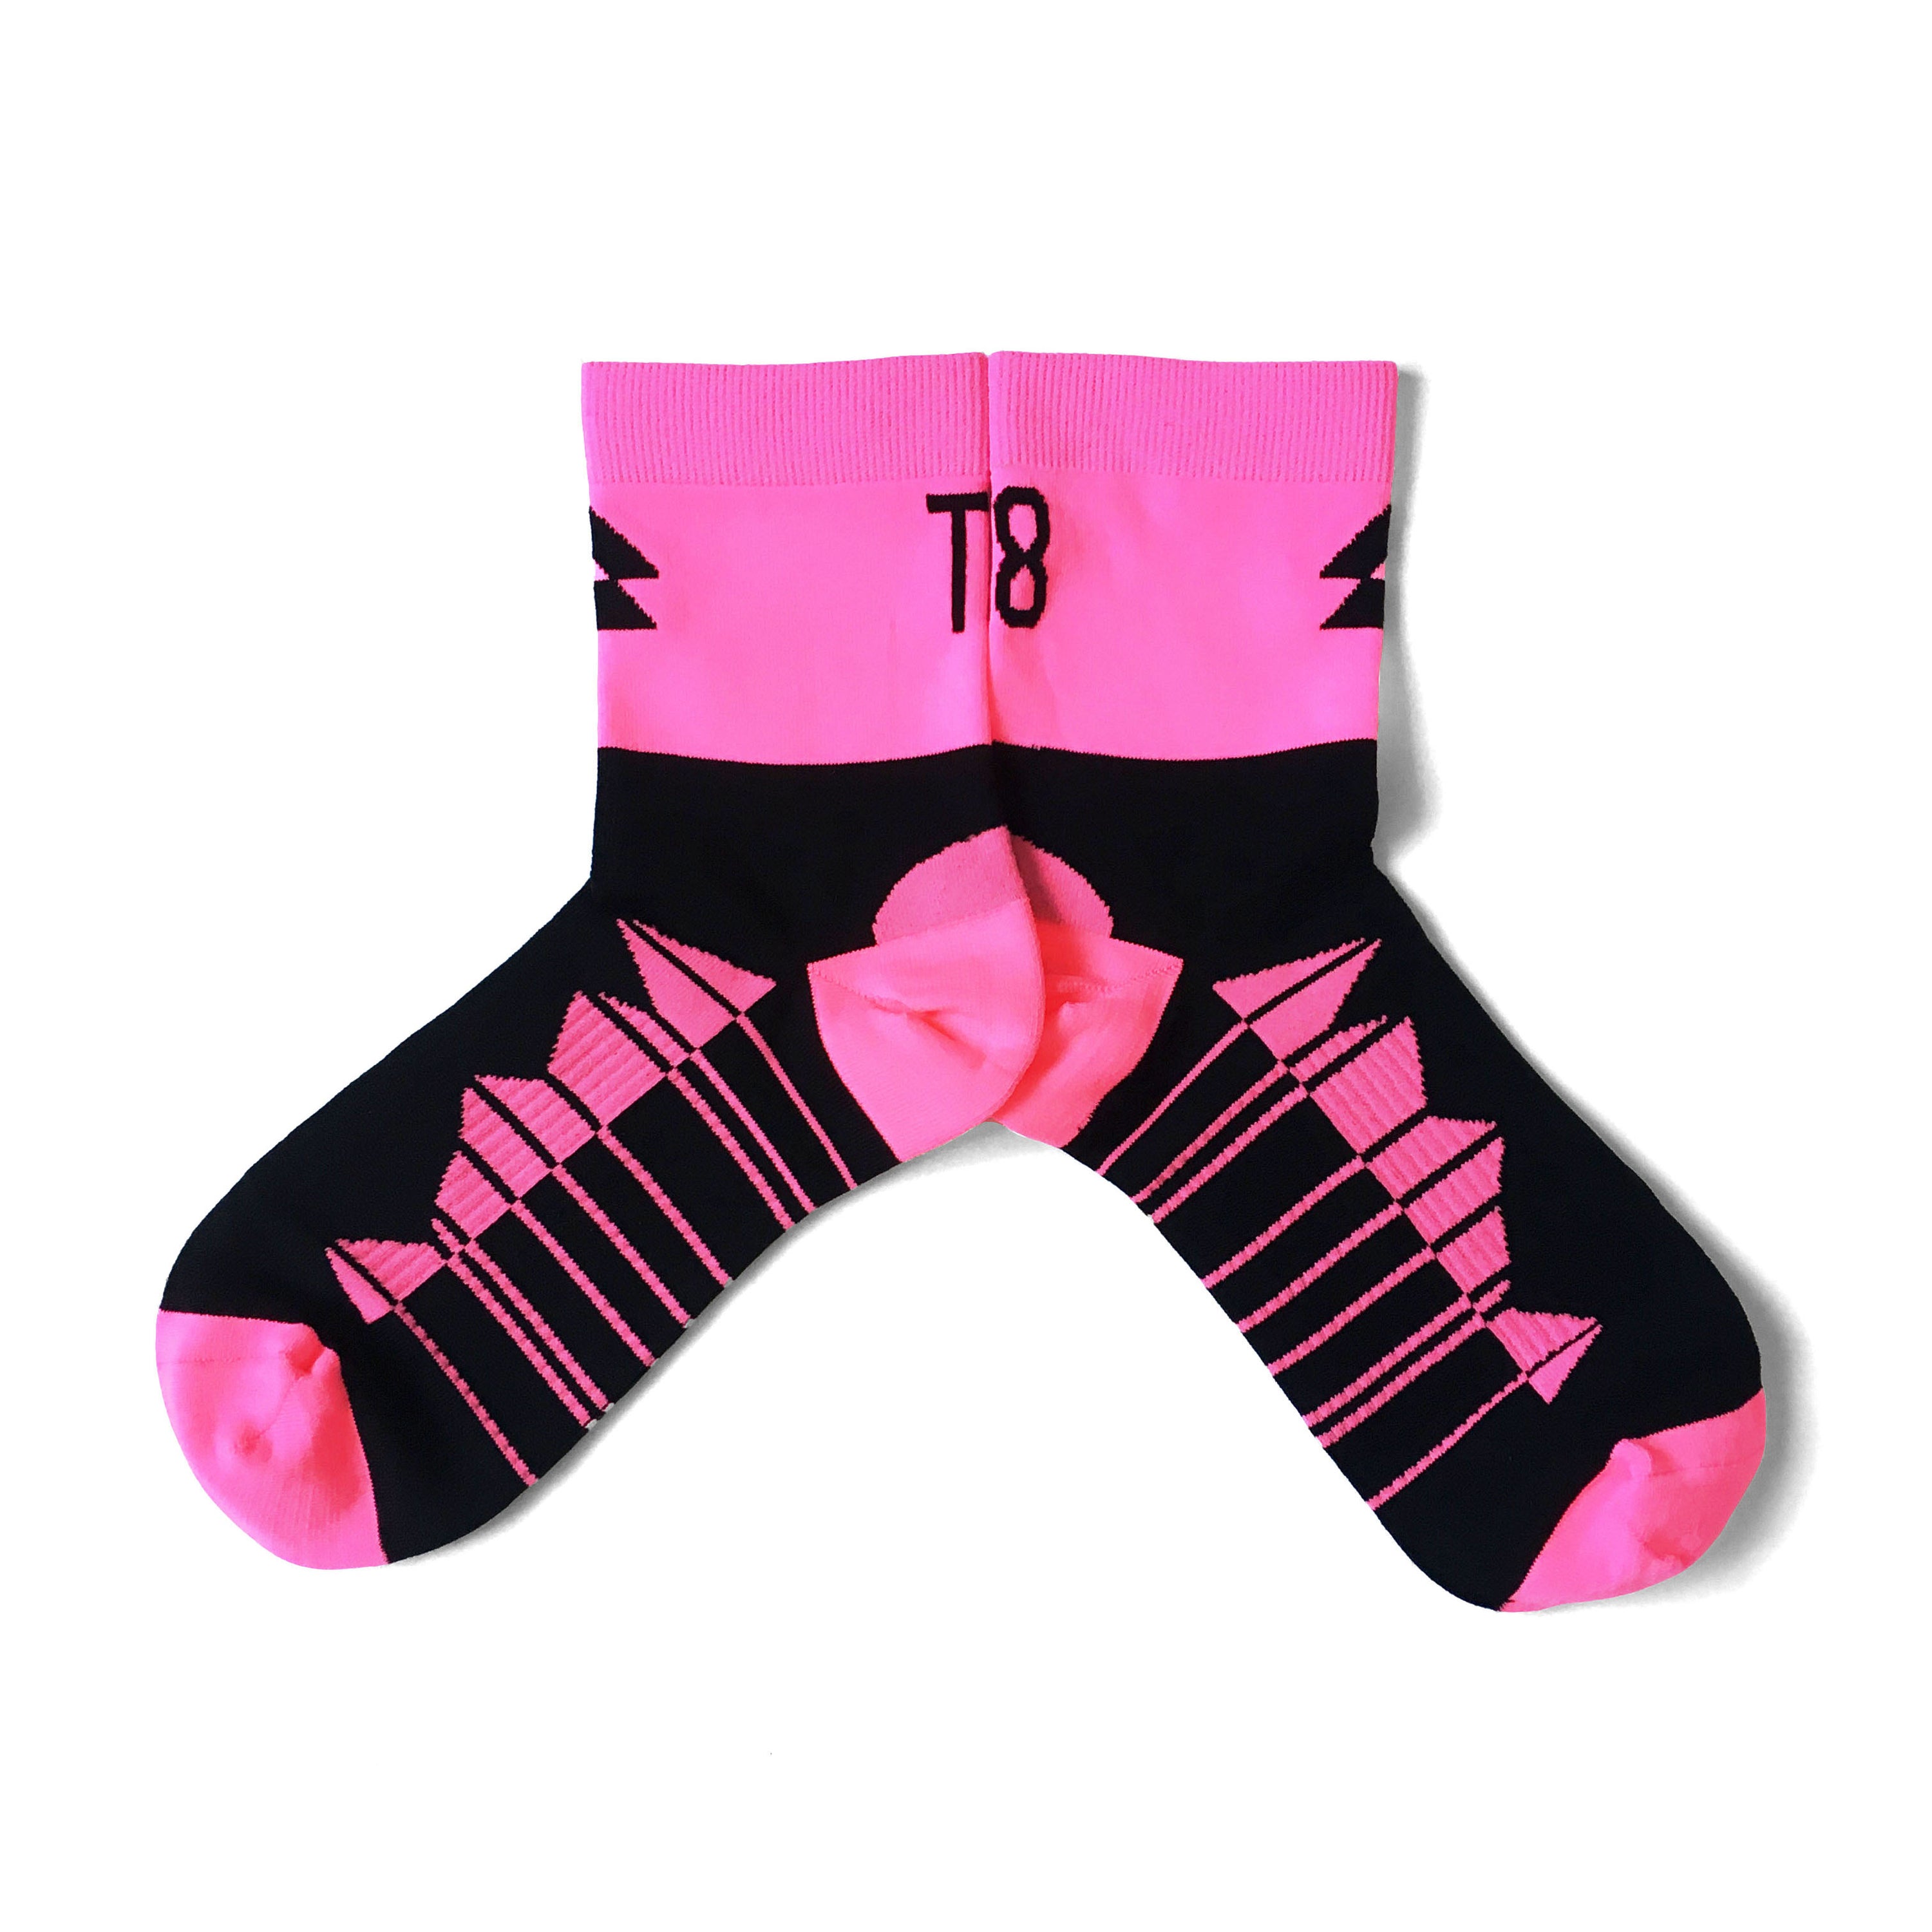 T8 - running socks – Sporthunger